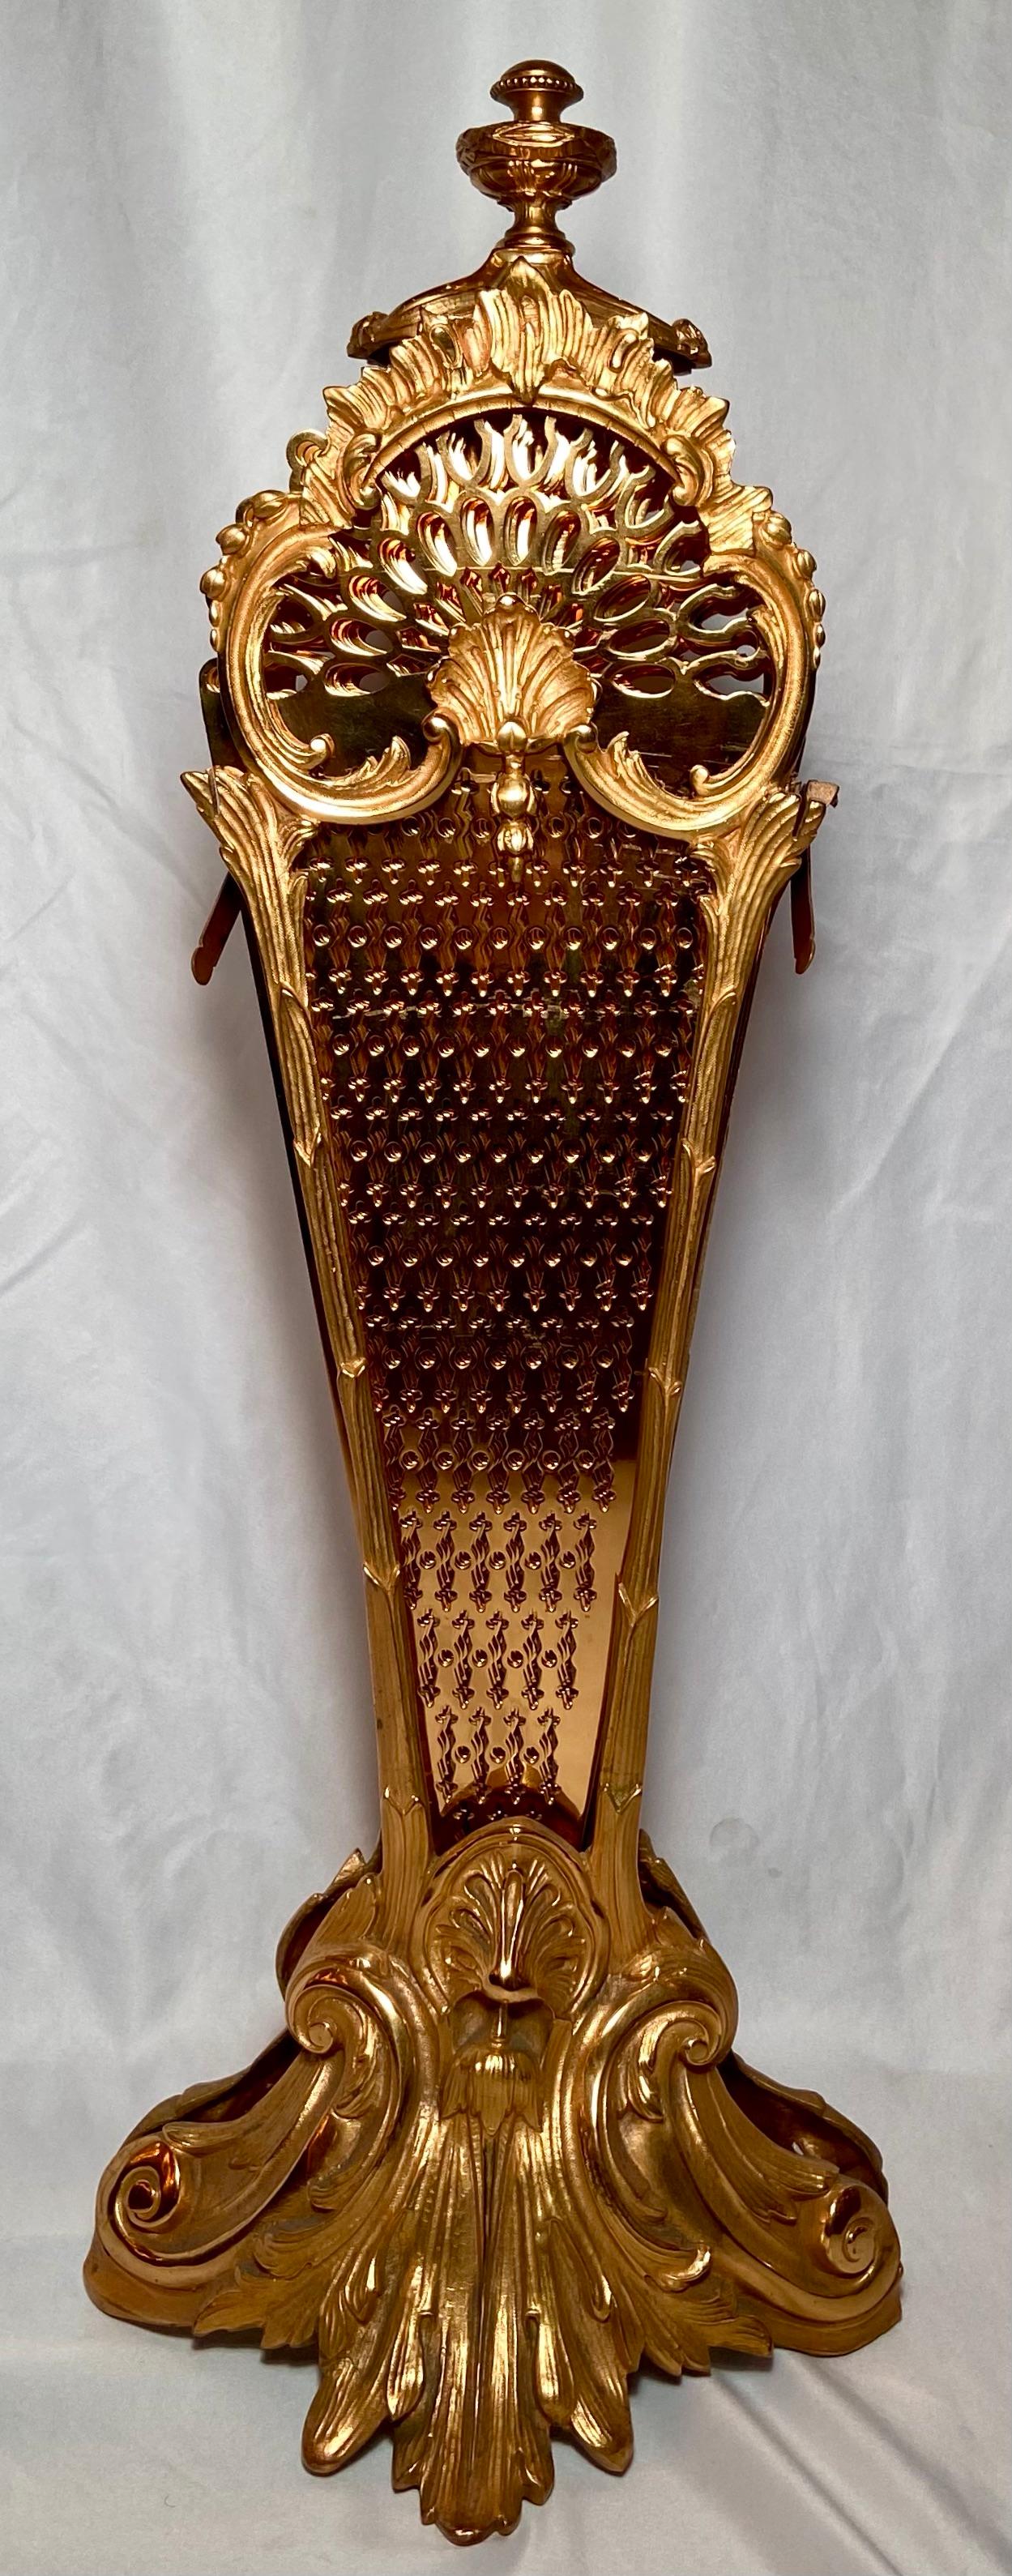 Antique French Napoleon III gold bronze folding fan fire screen, Circa 1890's.